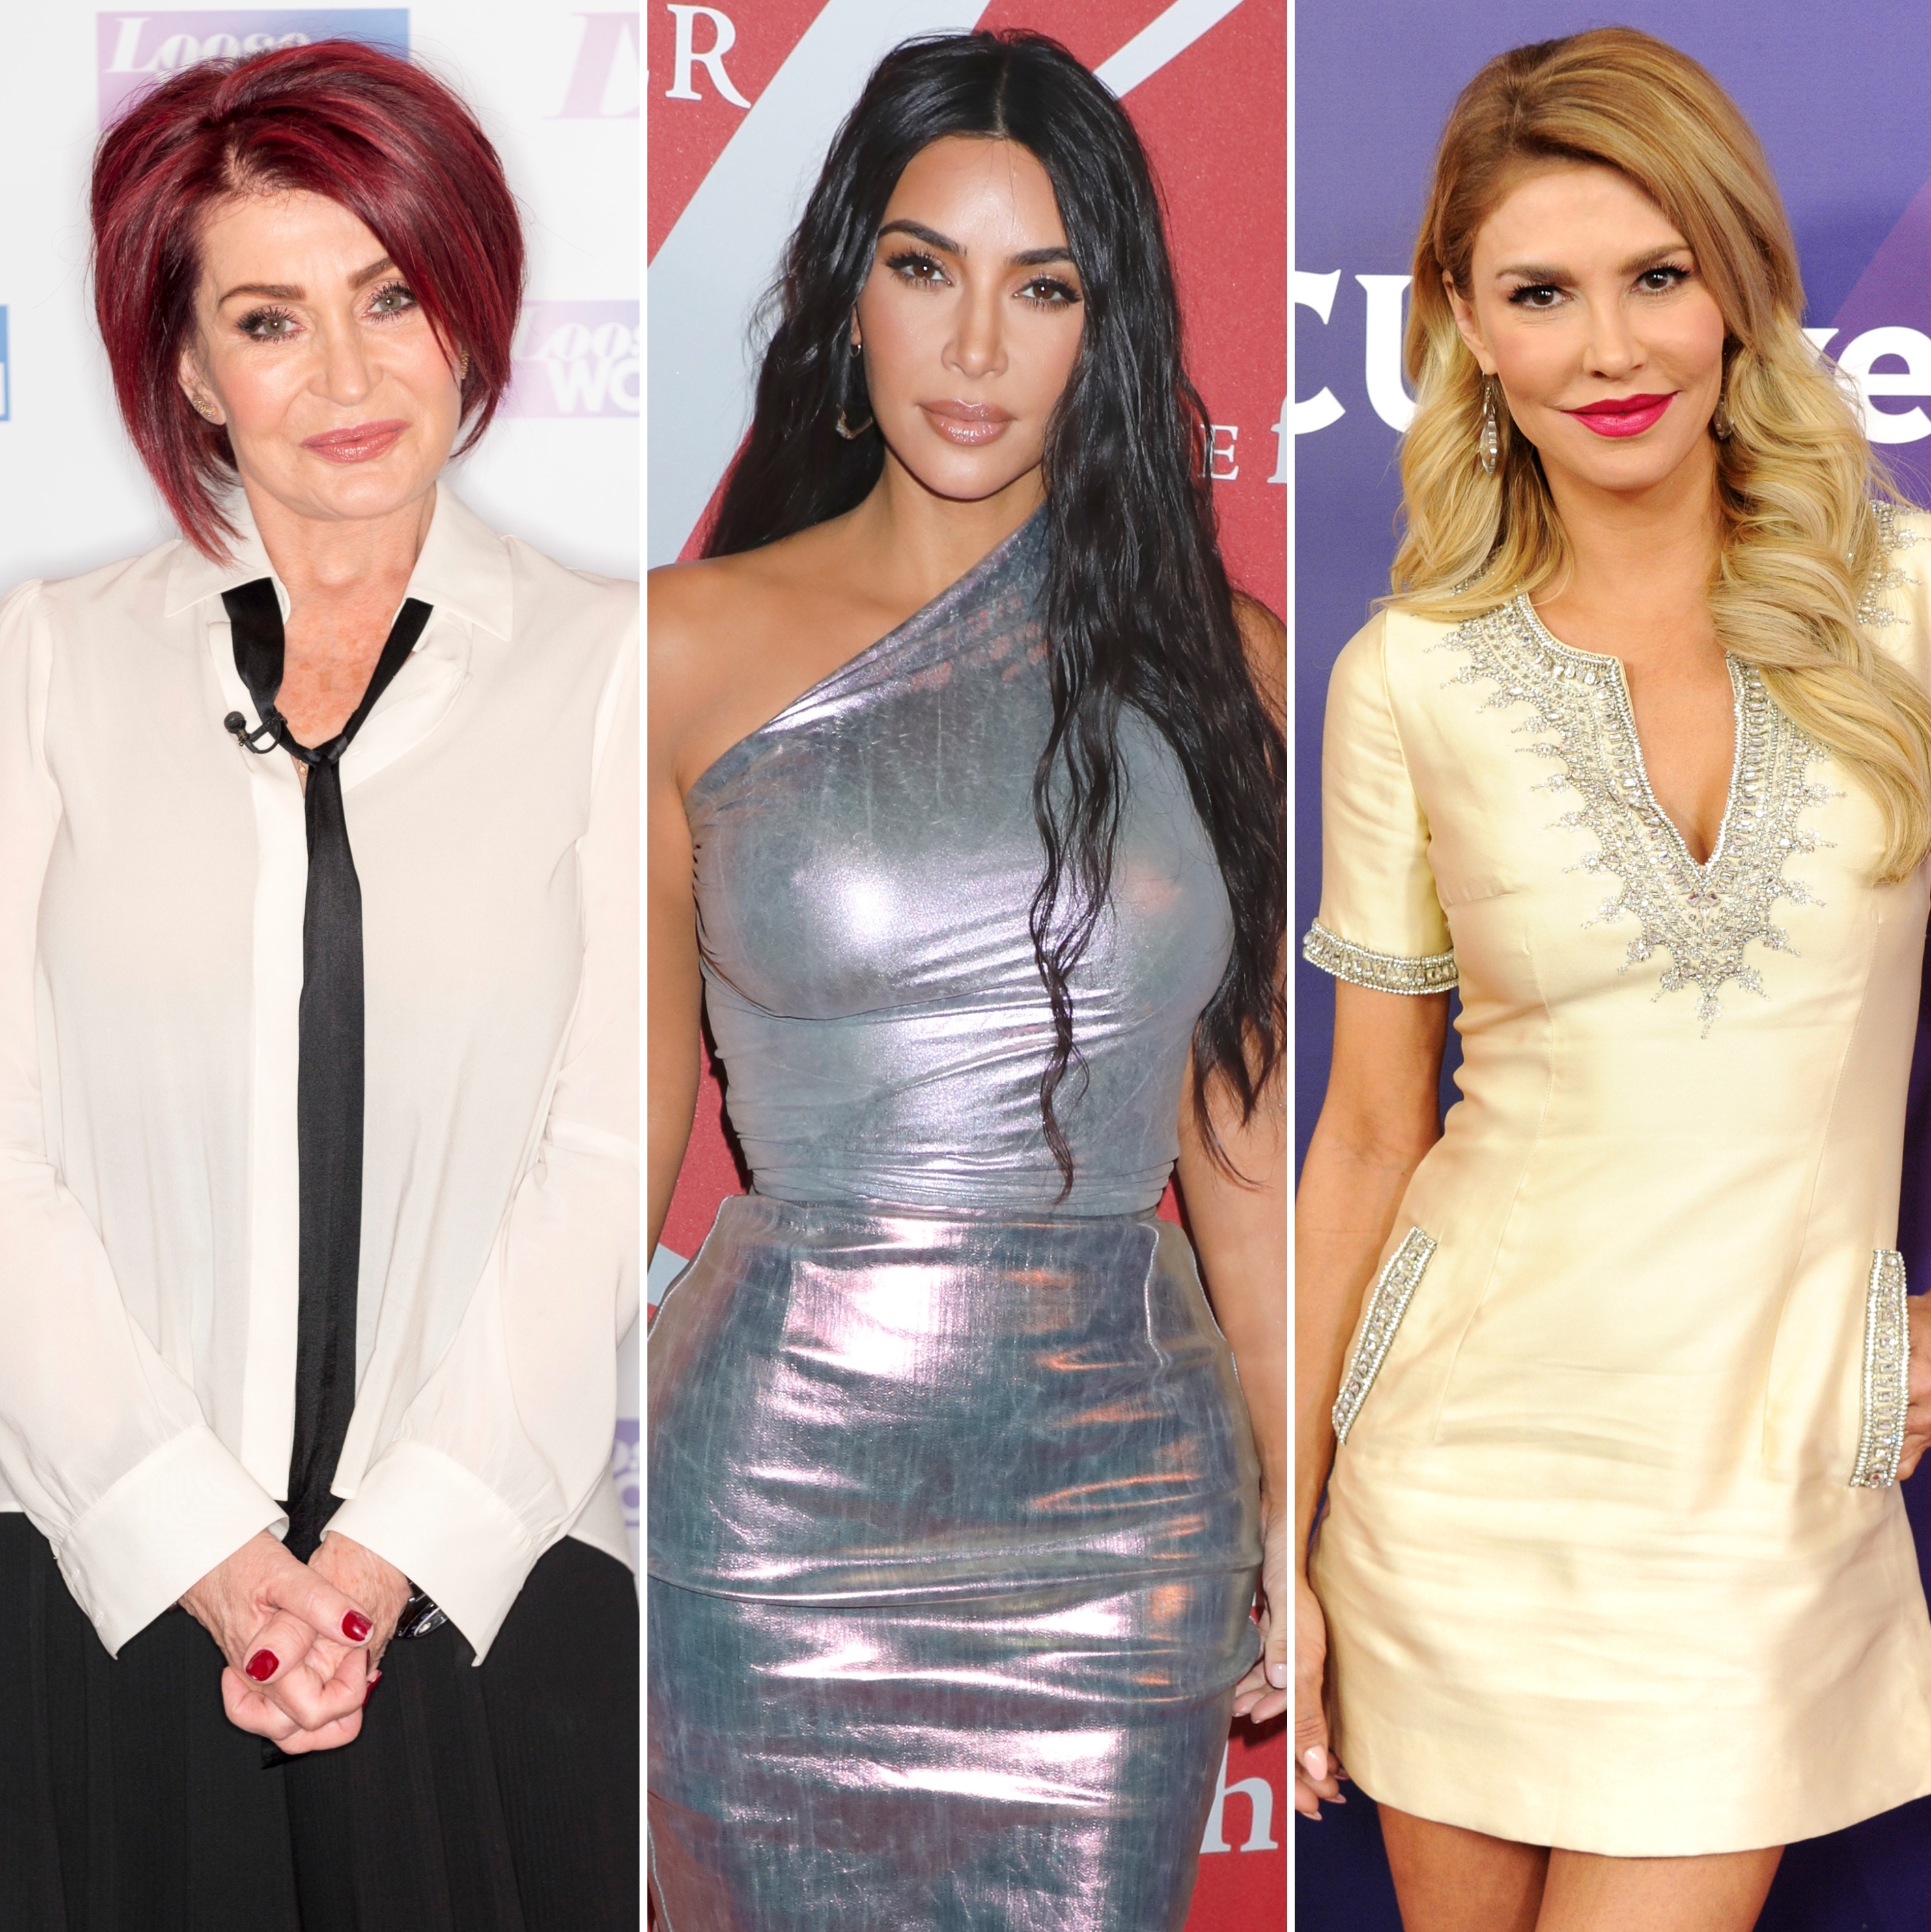 Kardashian Porn Clit - Celebrities Who've Had Secret Plastic Surgery 'Down There'